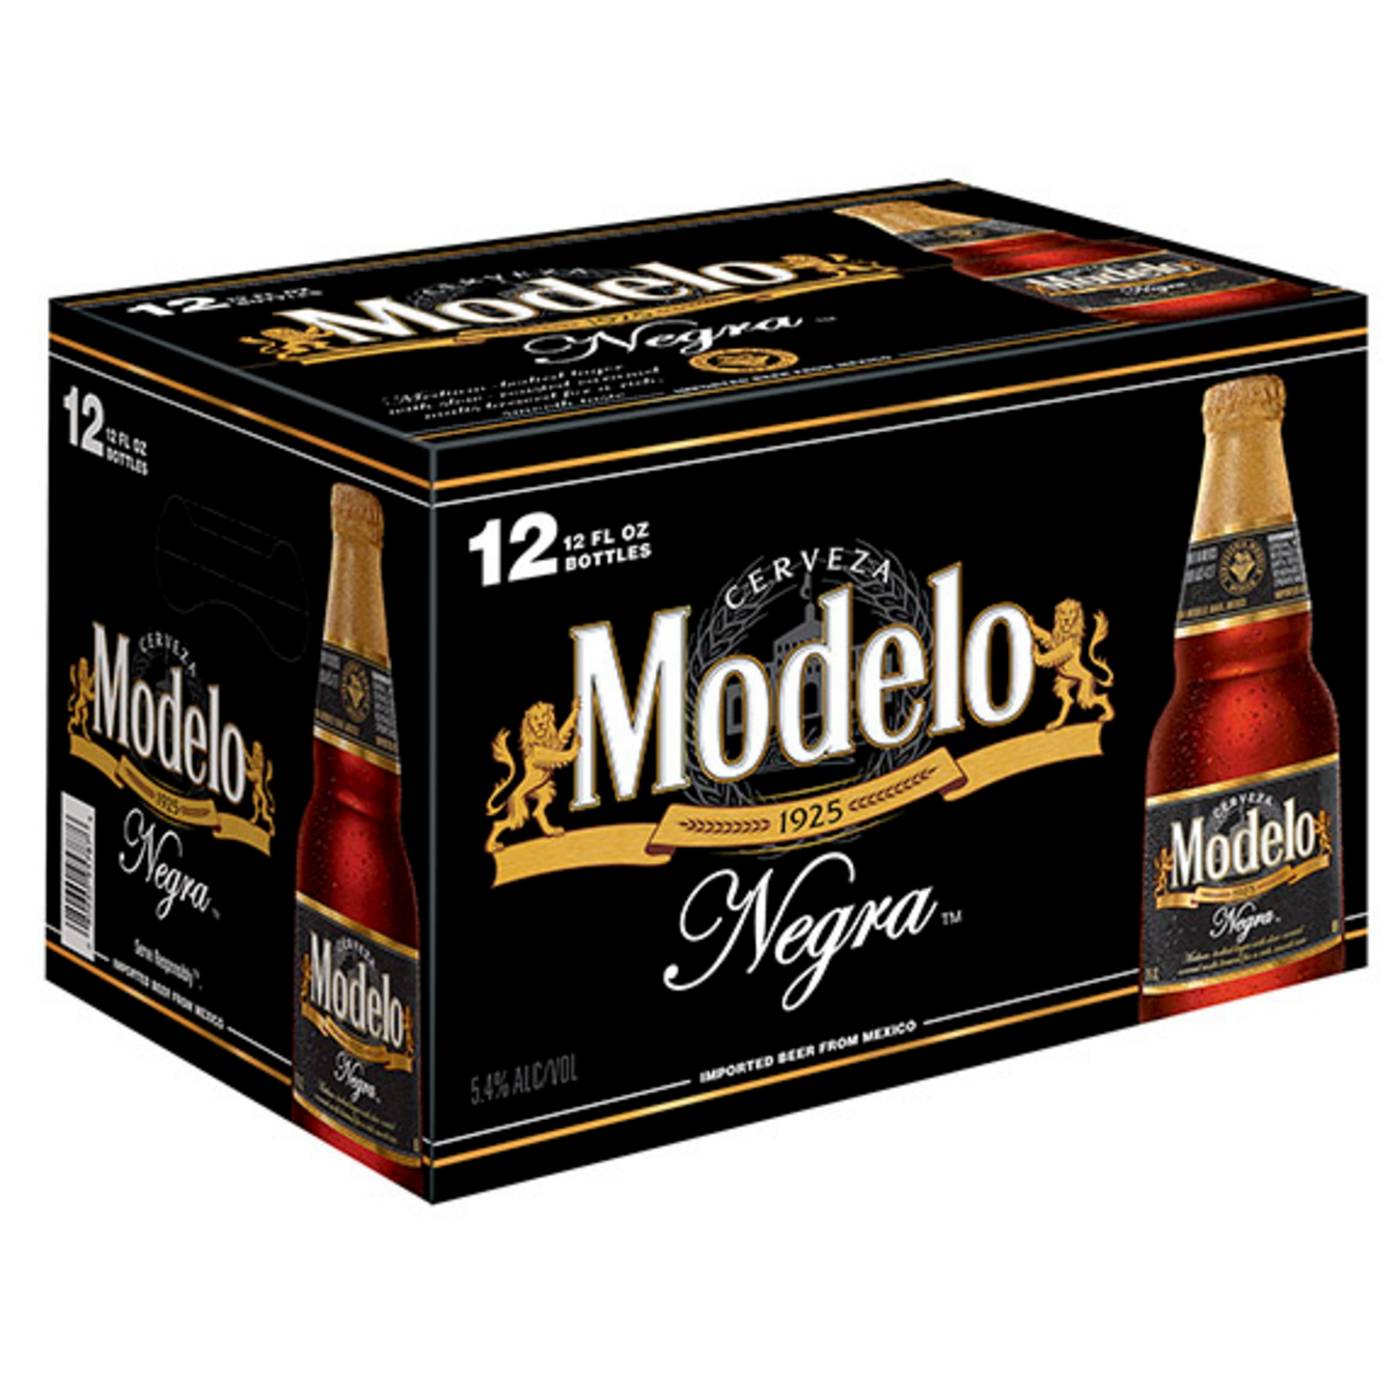 Modelo Beer, Negra - 12 fl oz